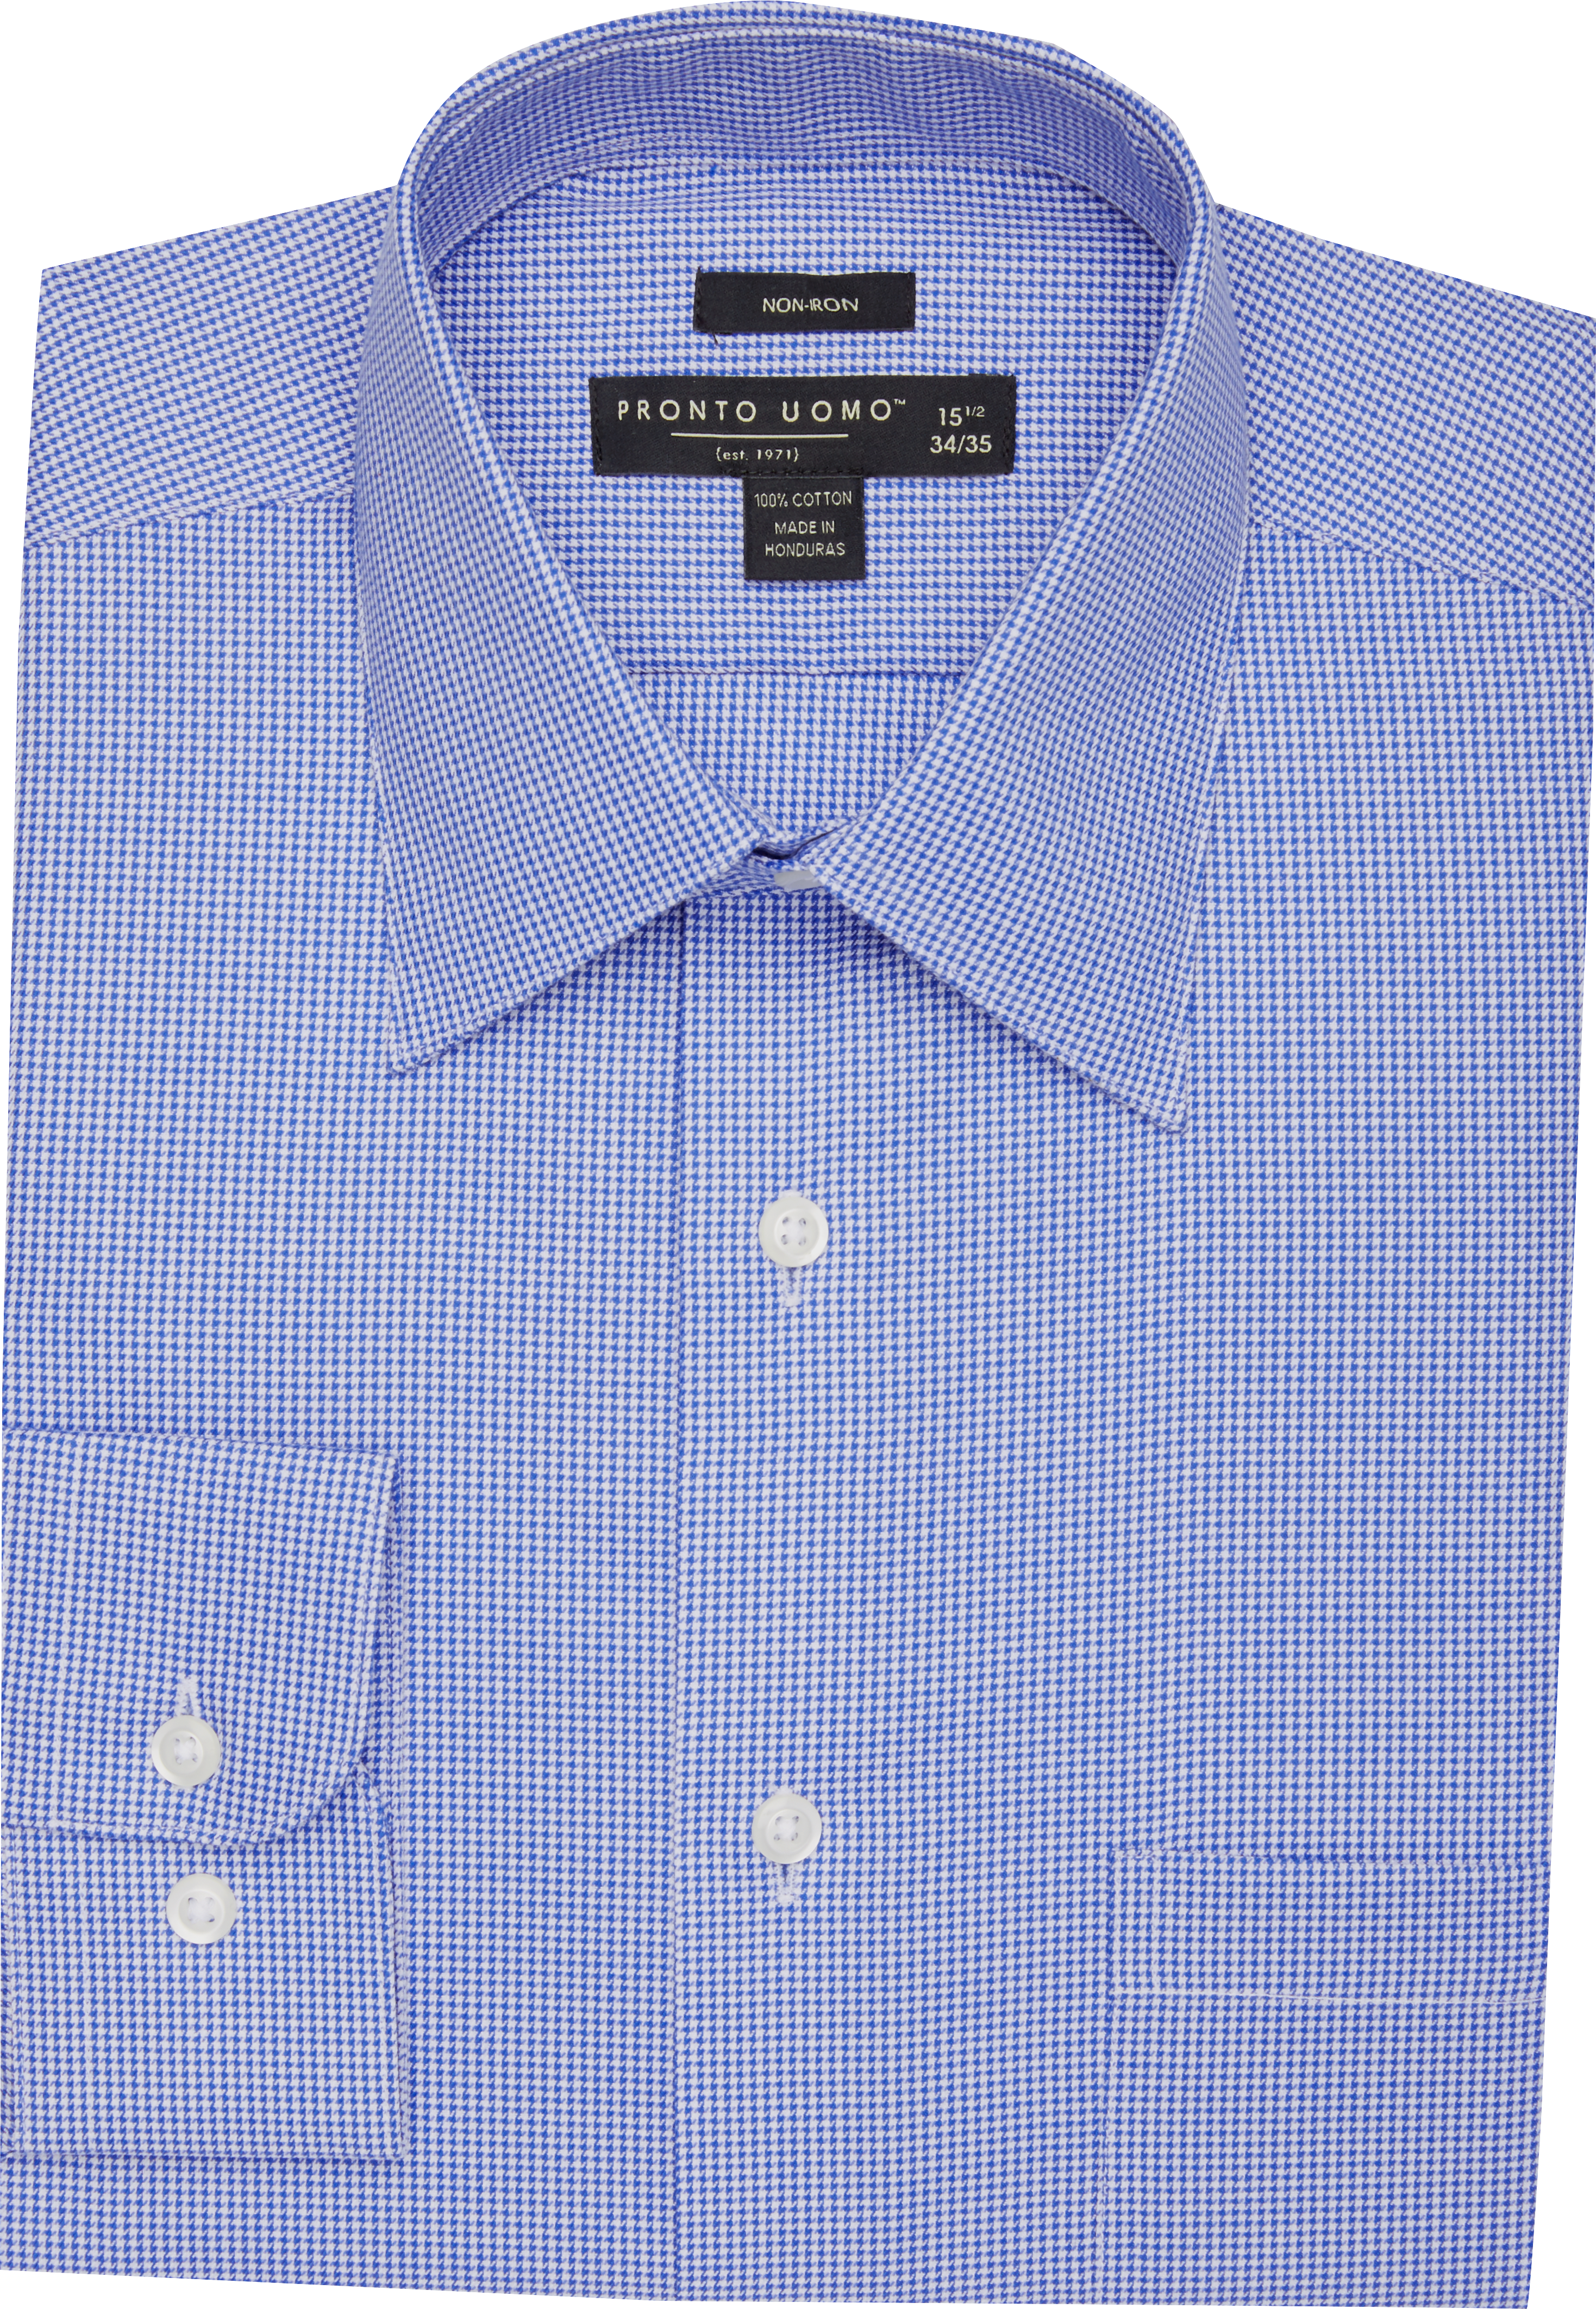 Pronto Uomo Blue Check Dress Shirt - Men's Sale | Men's Wearhouse